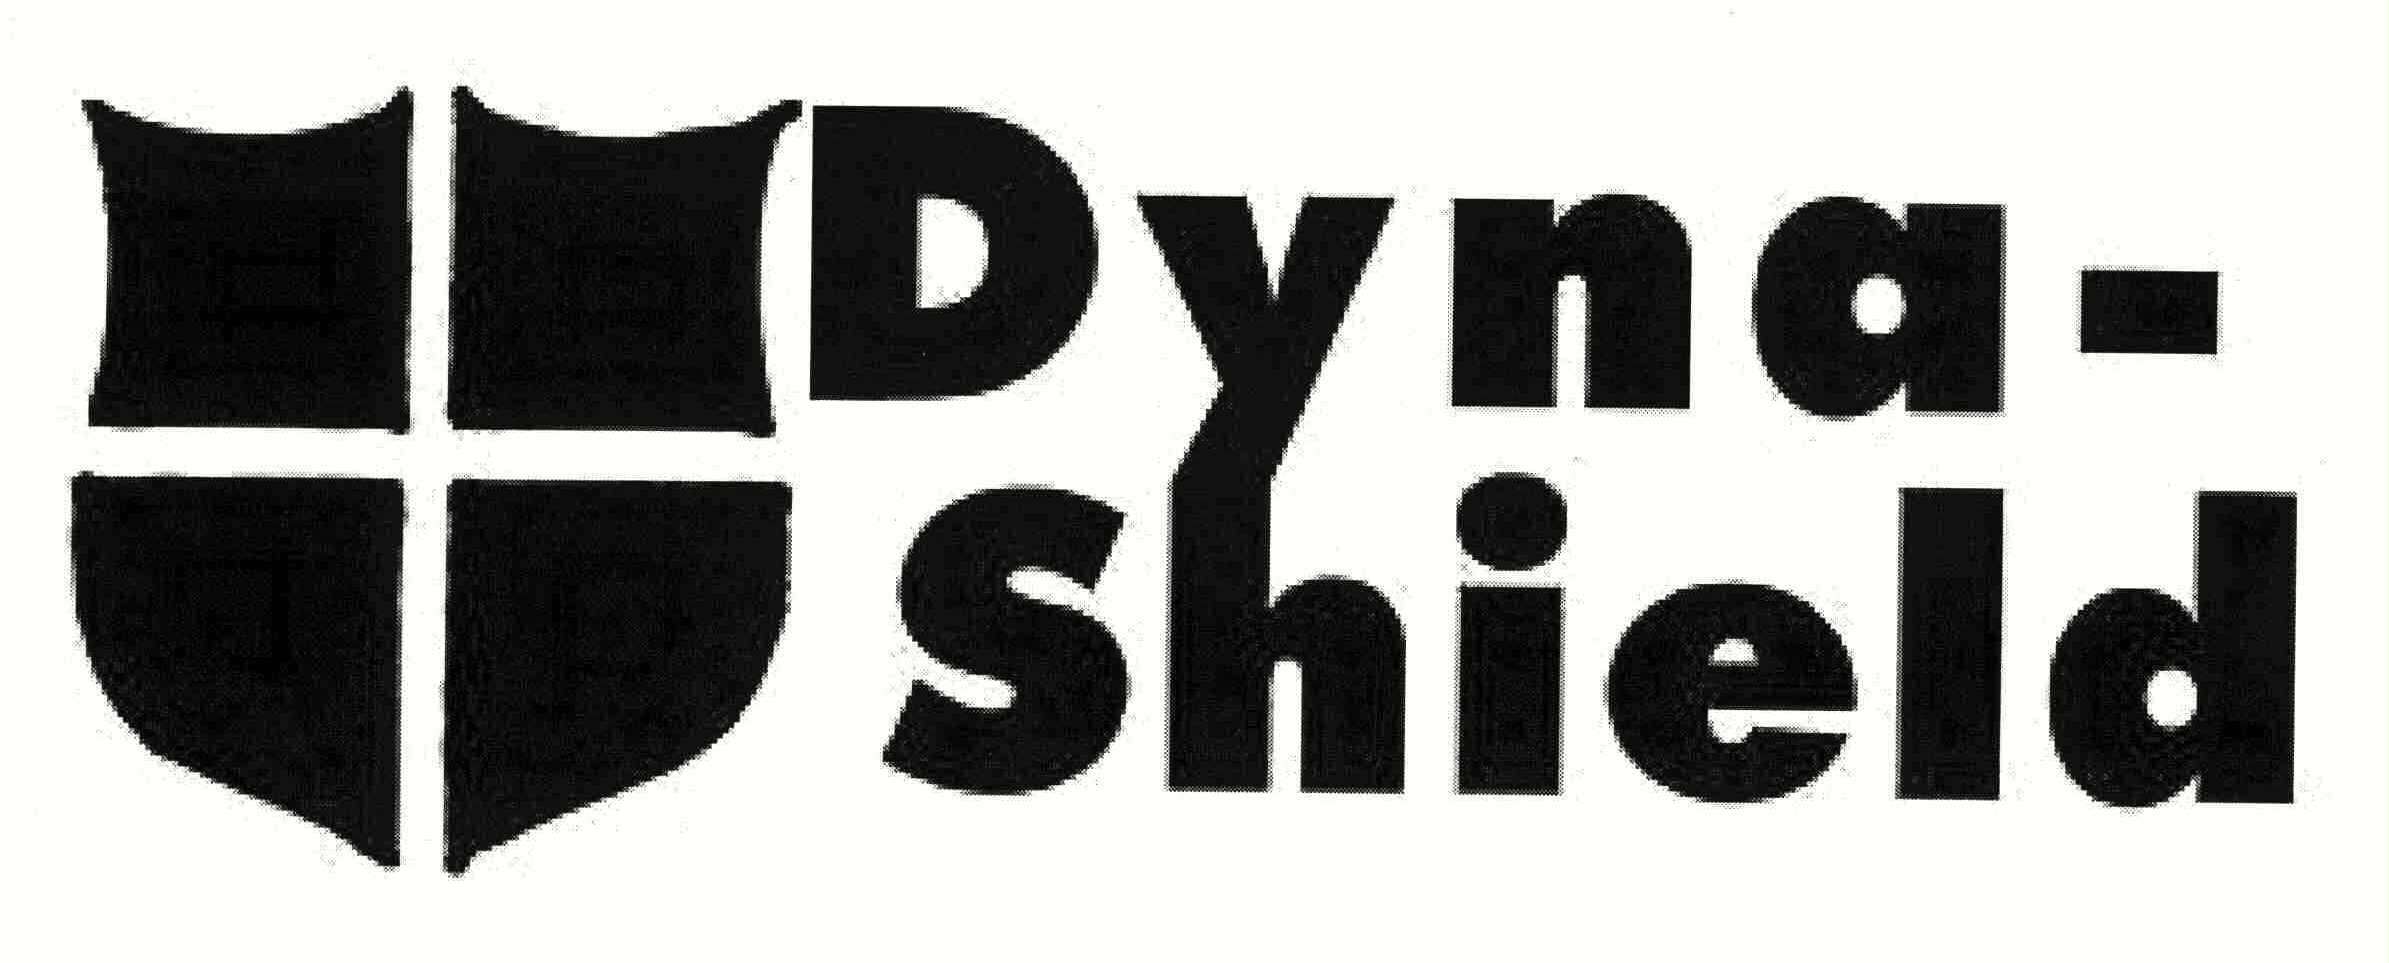 Trademark Logo DYNA-SHIELD